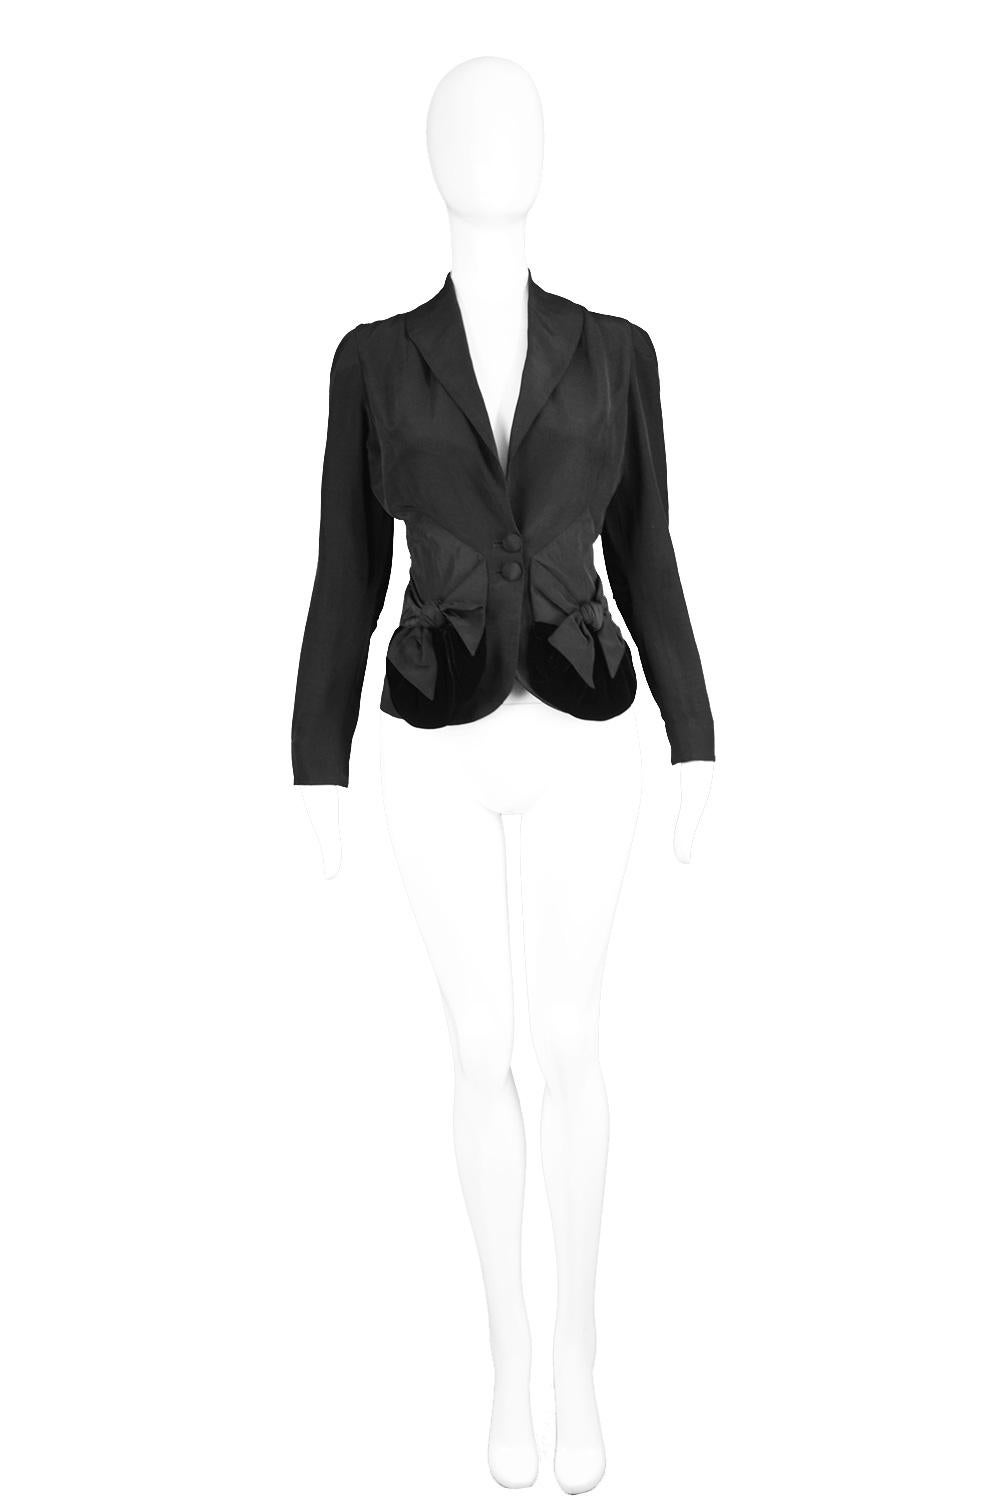 Saks 5th Avenue 1950s Vintage Black Faille & Velvet  Bow Detail Women's Blazer Jacket

Estimated Size: fits roughly like a modern UK 8/ US 4/ EU 36. Please check measurements.  
Bust - 34” / 86cm
Waist - 26” / 66cm
Length (Shoulder to Hem) - 21” /